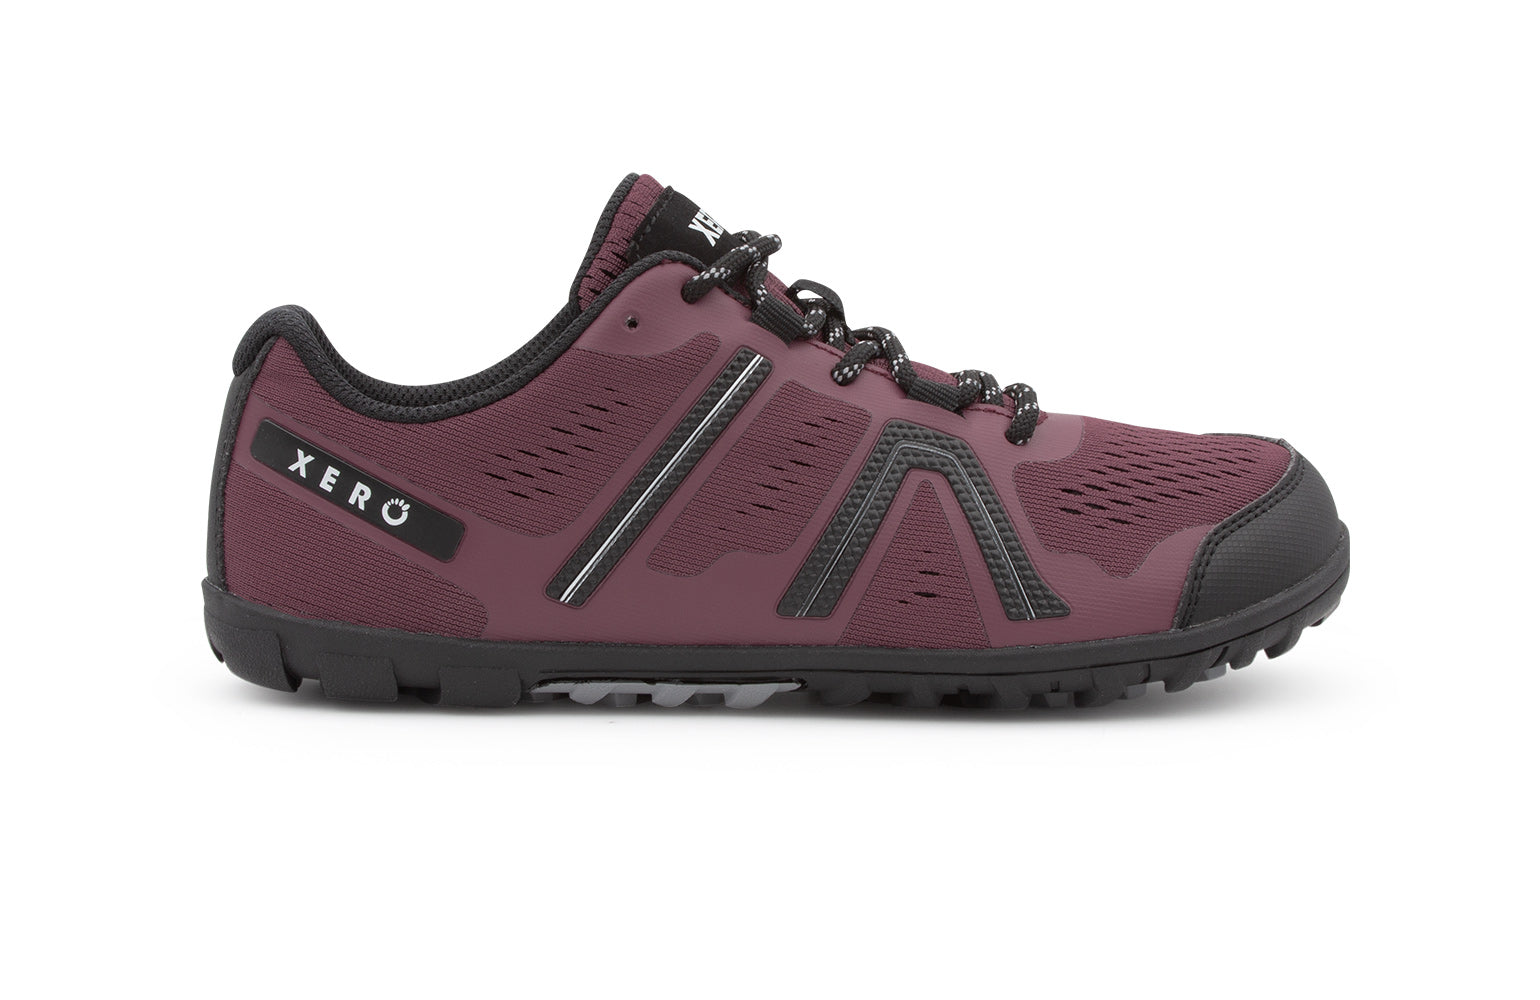 Xero Shoes Mesa Trail barfods trailsko til kvinder i farven muddy rose, yderside